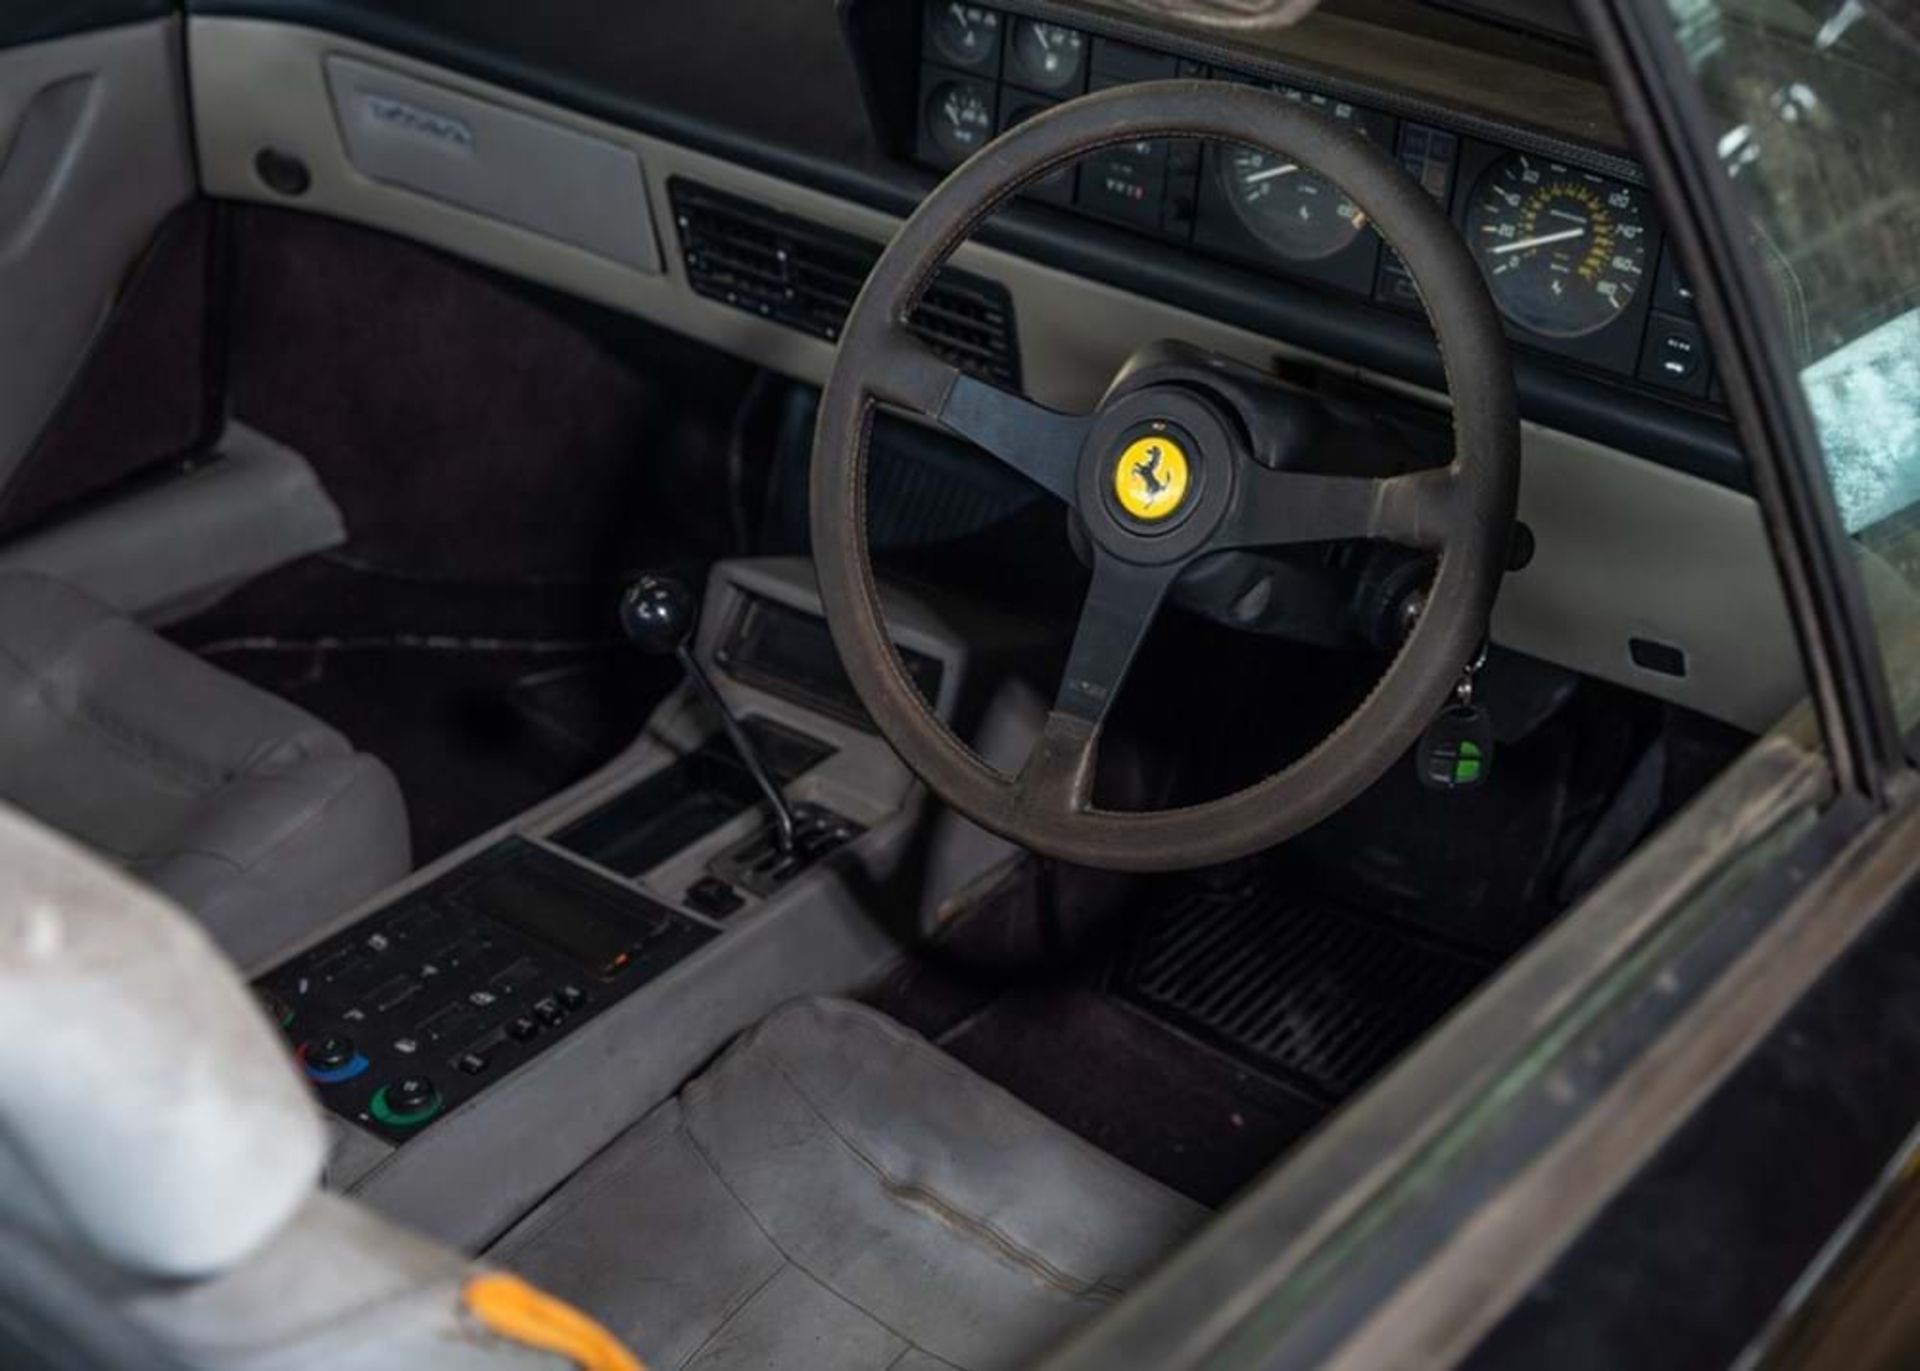 1988 Ferrari Mondial Cabriolet (3.2 litre) - Image 4 of 10